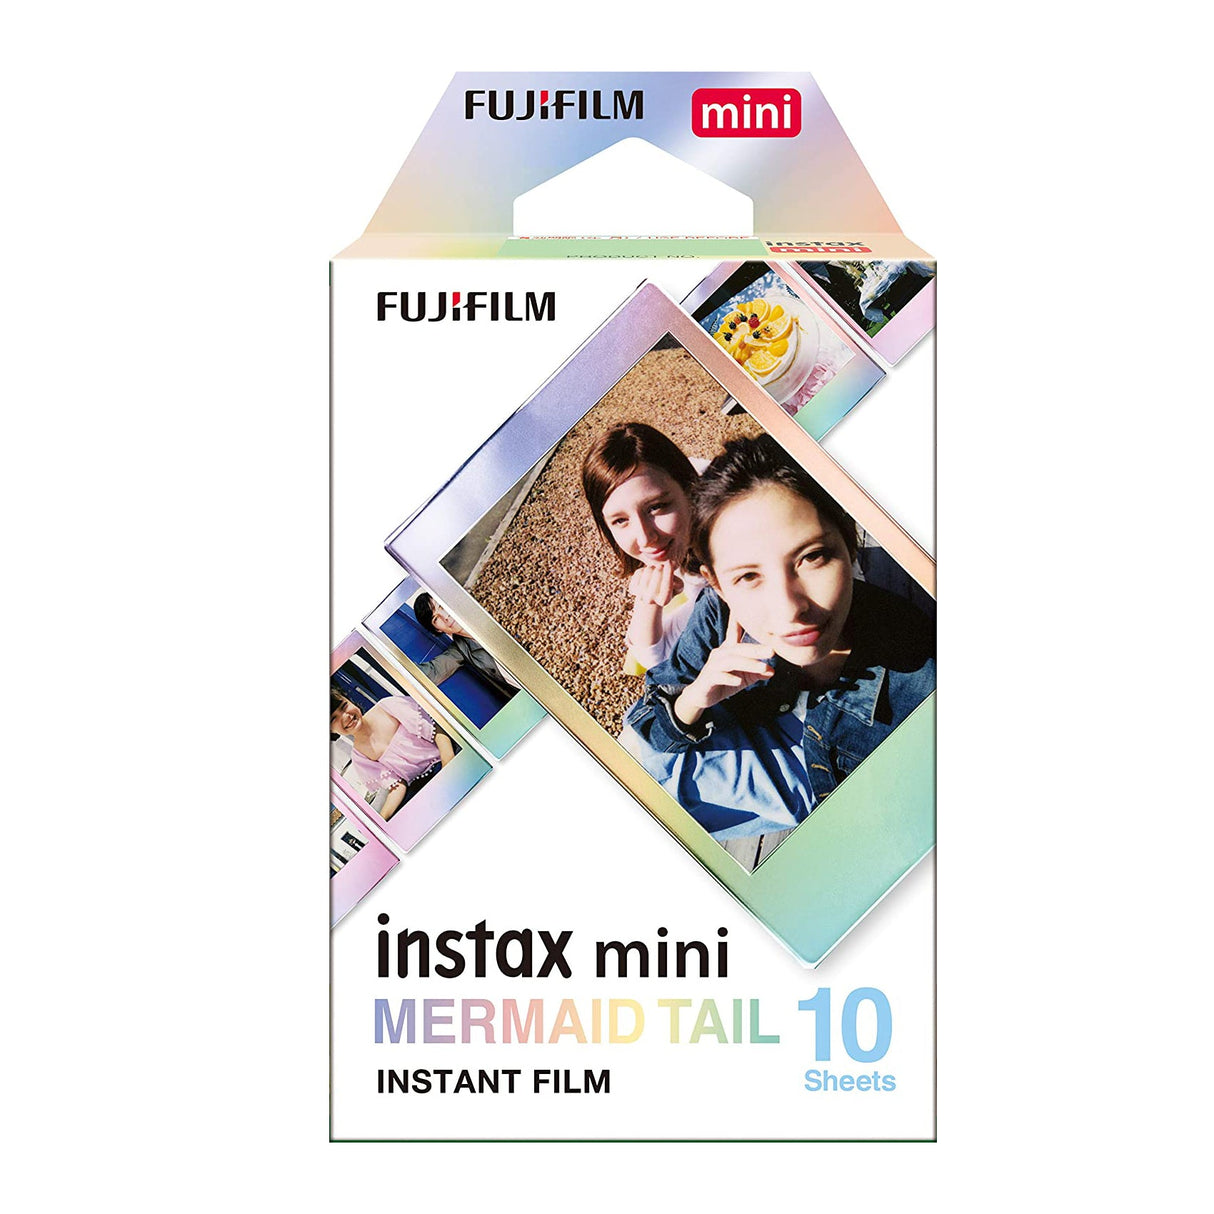 Fujifilm Instax Mini 10X1 mermaid tail Instant Film with 96-sheet Album for mini film (Blush pink)